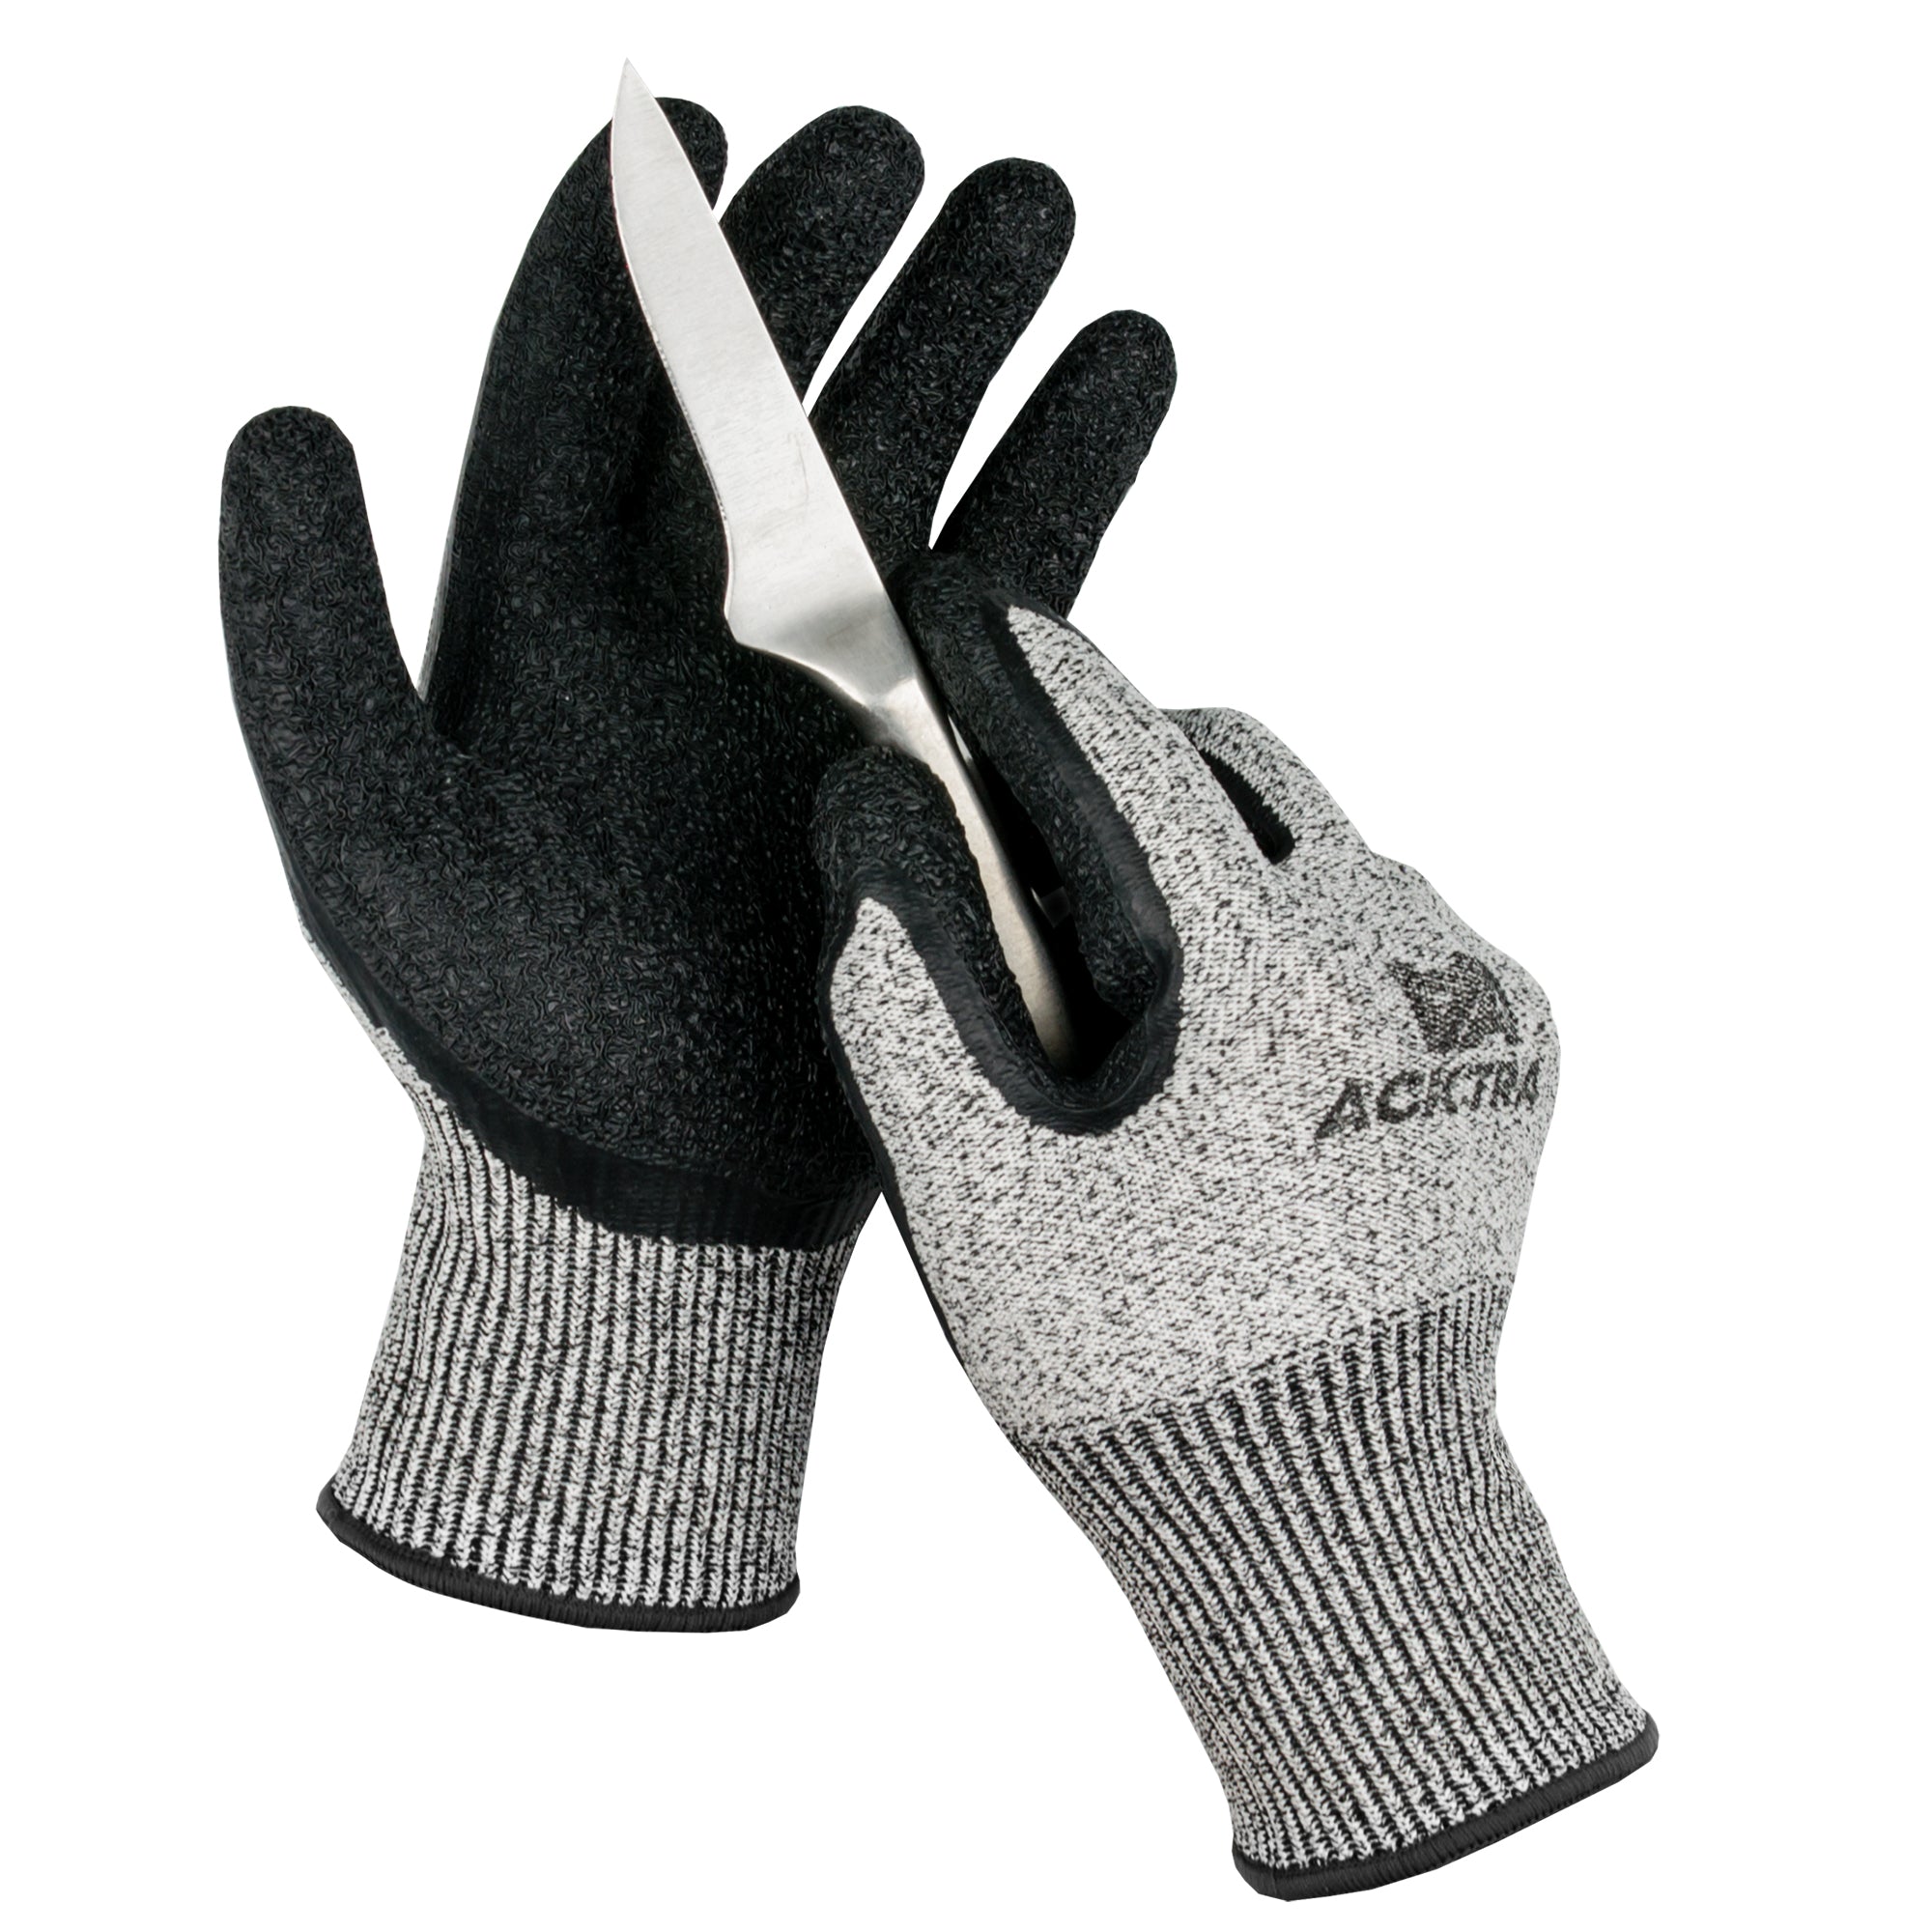 Anti Cut Gloves Level 5 Safety Work Gloves Cut Resistant Gloves